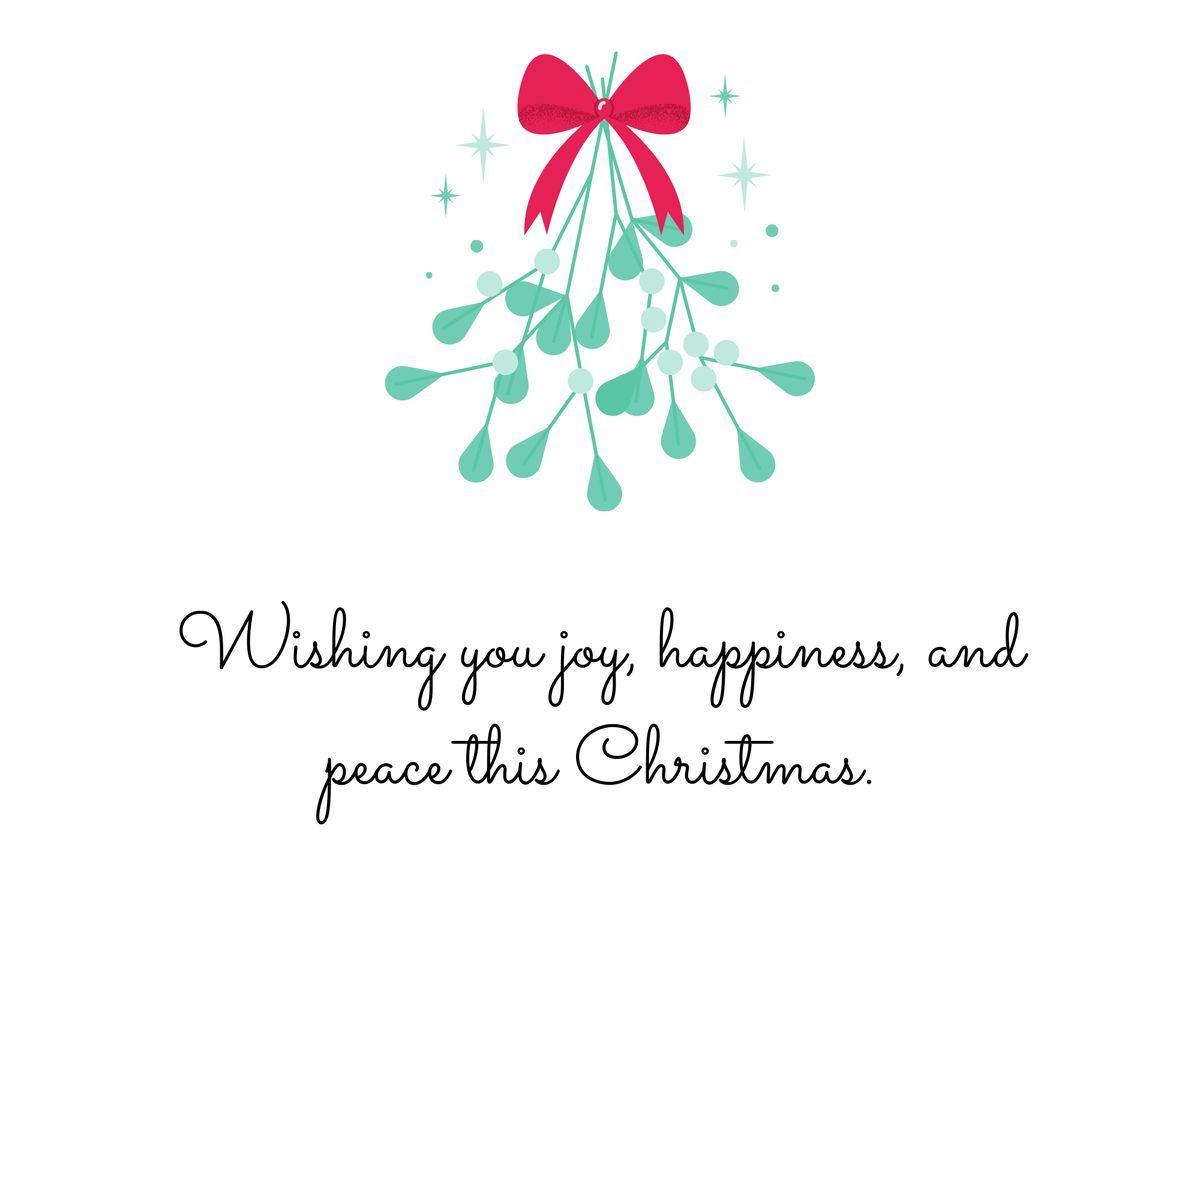 Wishing you joy, happiness, and peace this Christmas